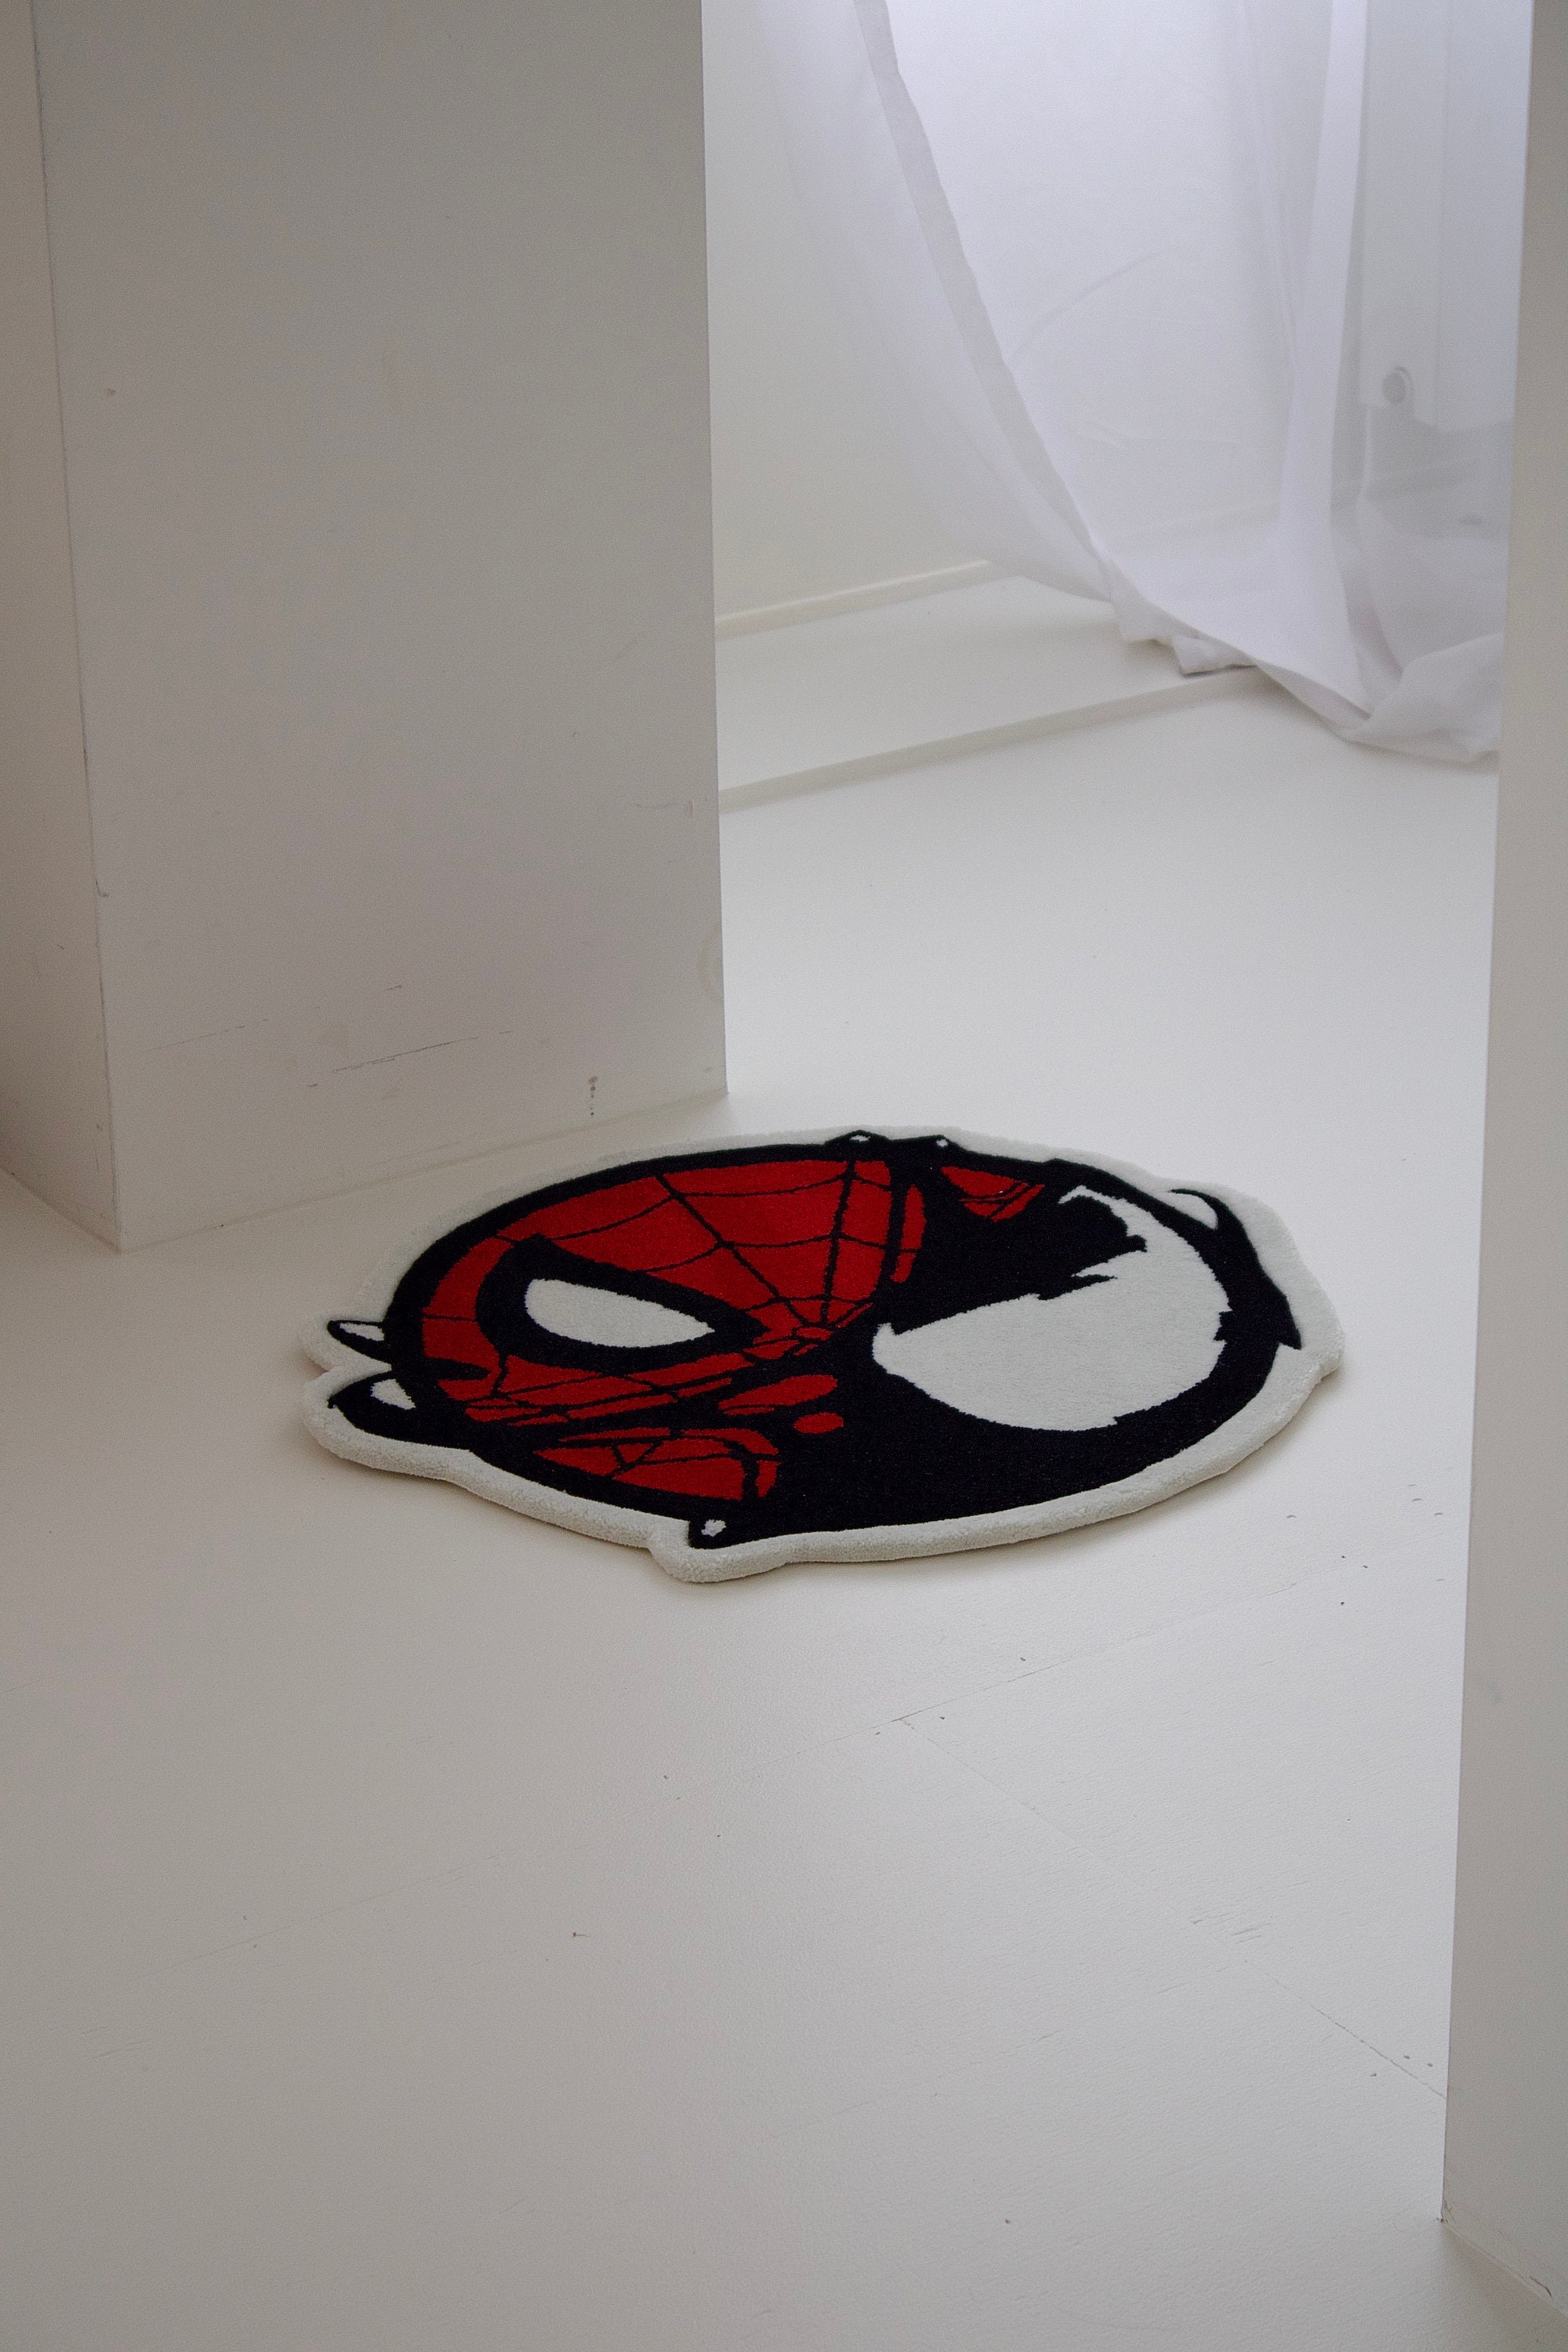 Tapis Enfant Spiderman Marvel : L'Héroïsme en Couleurs – Heikoa